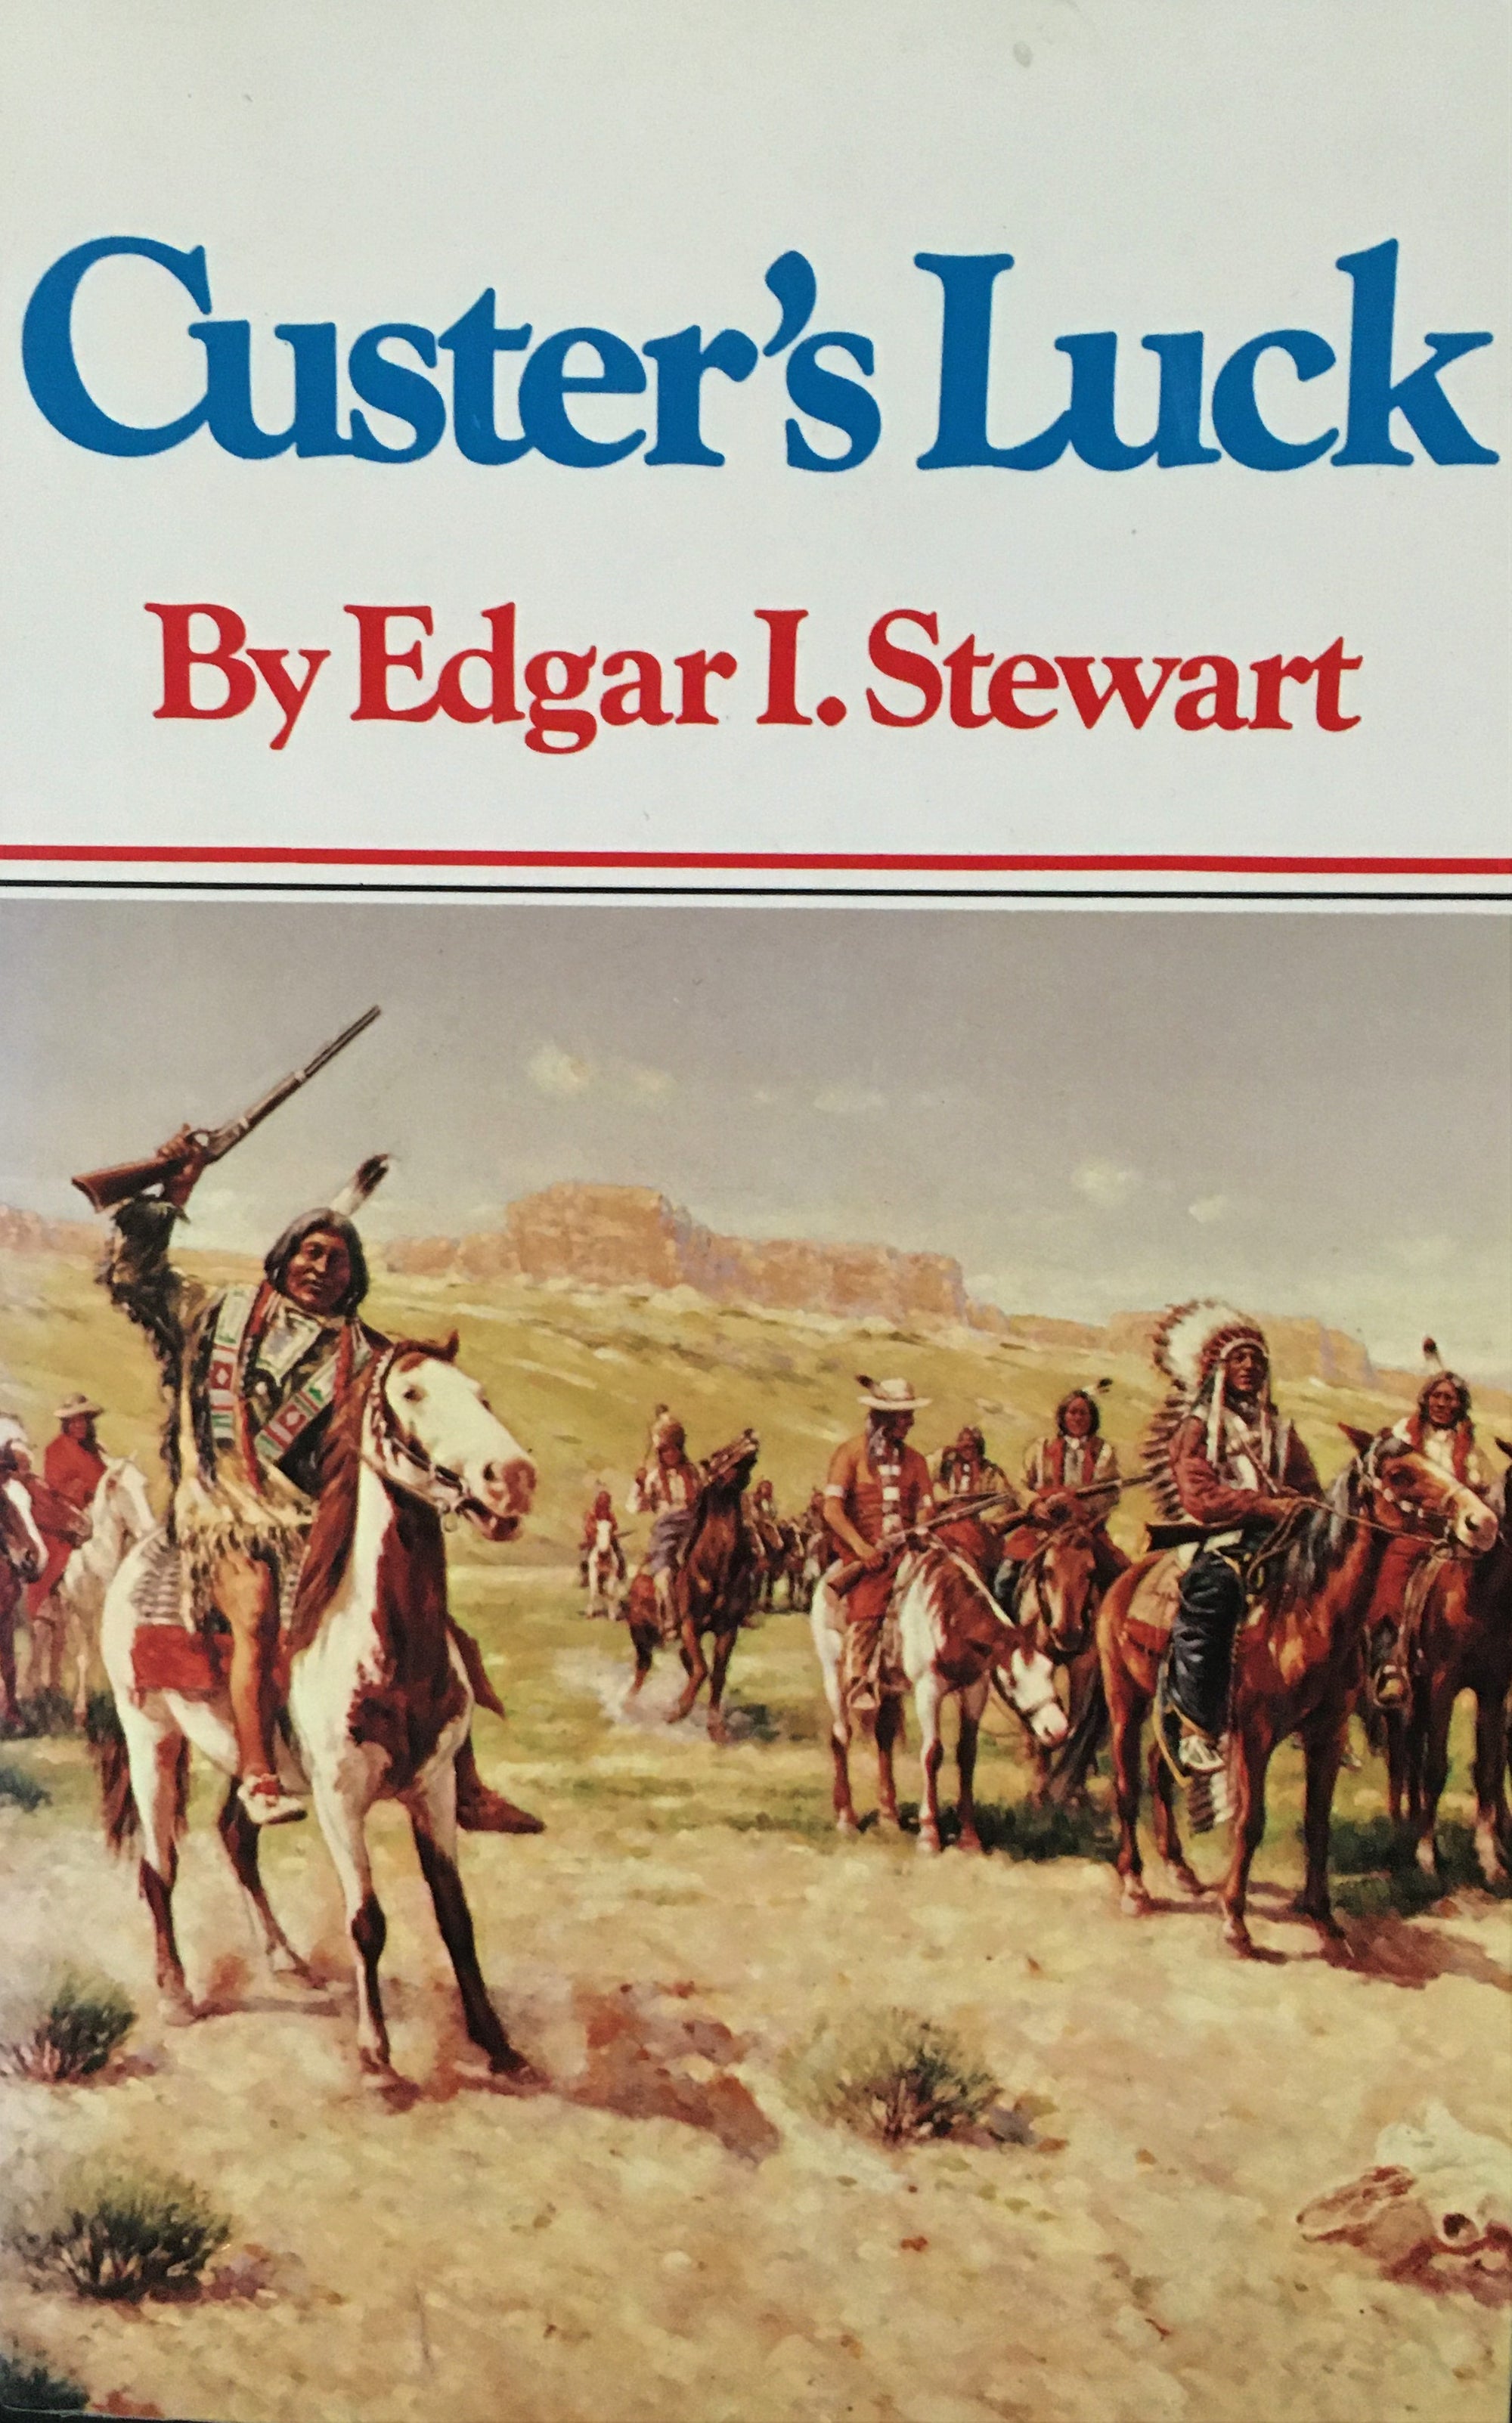 Custer's Luck by Edgar I. Stewart Book Cover